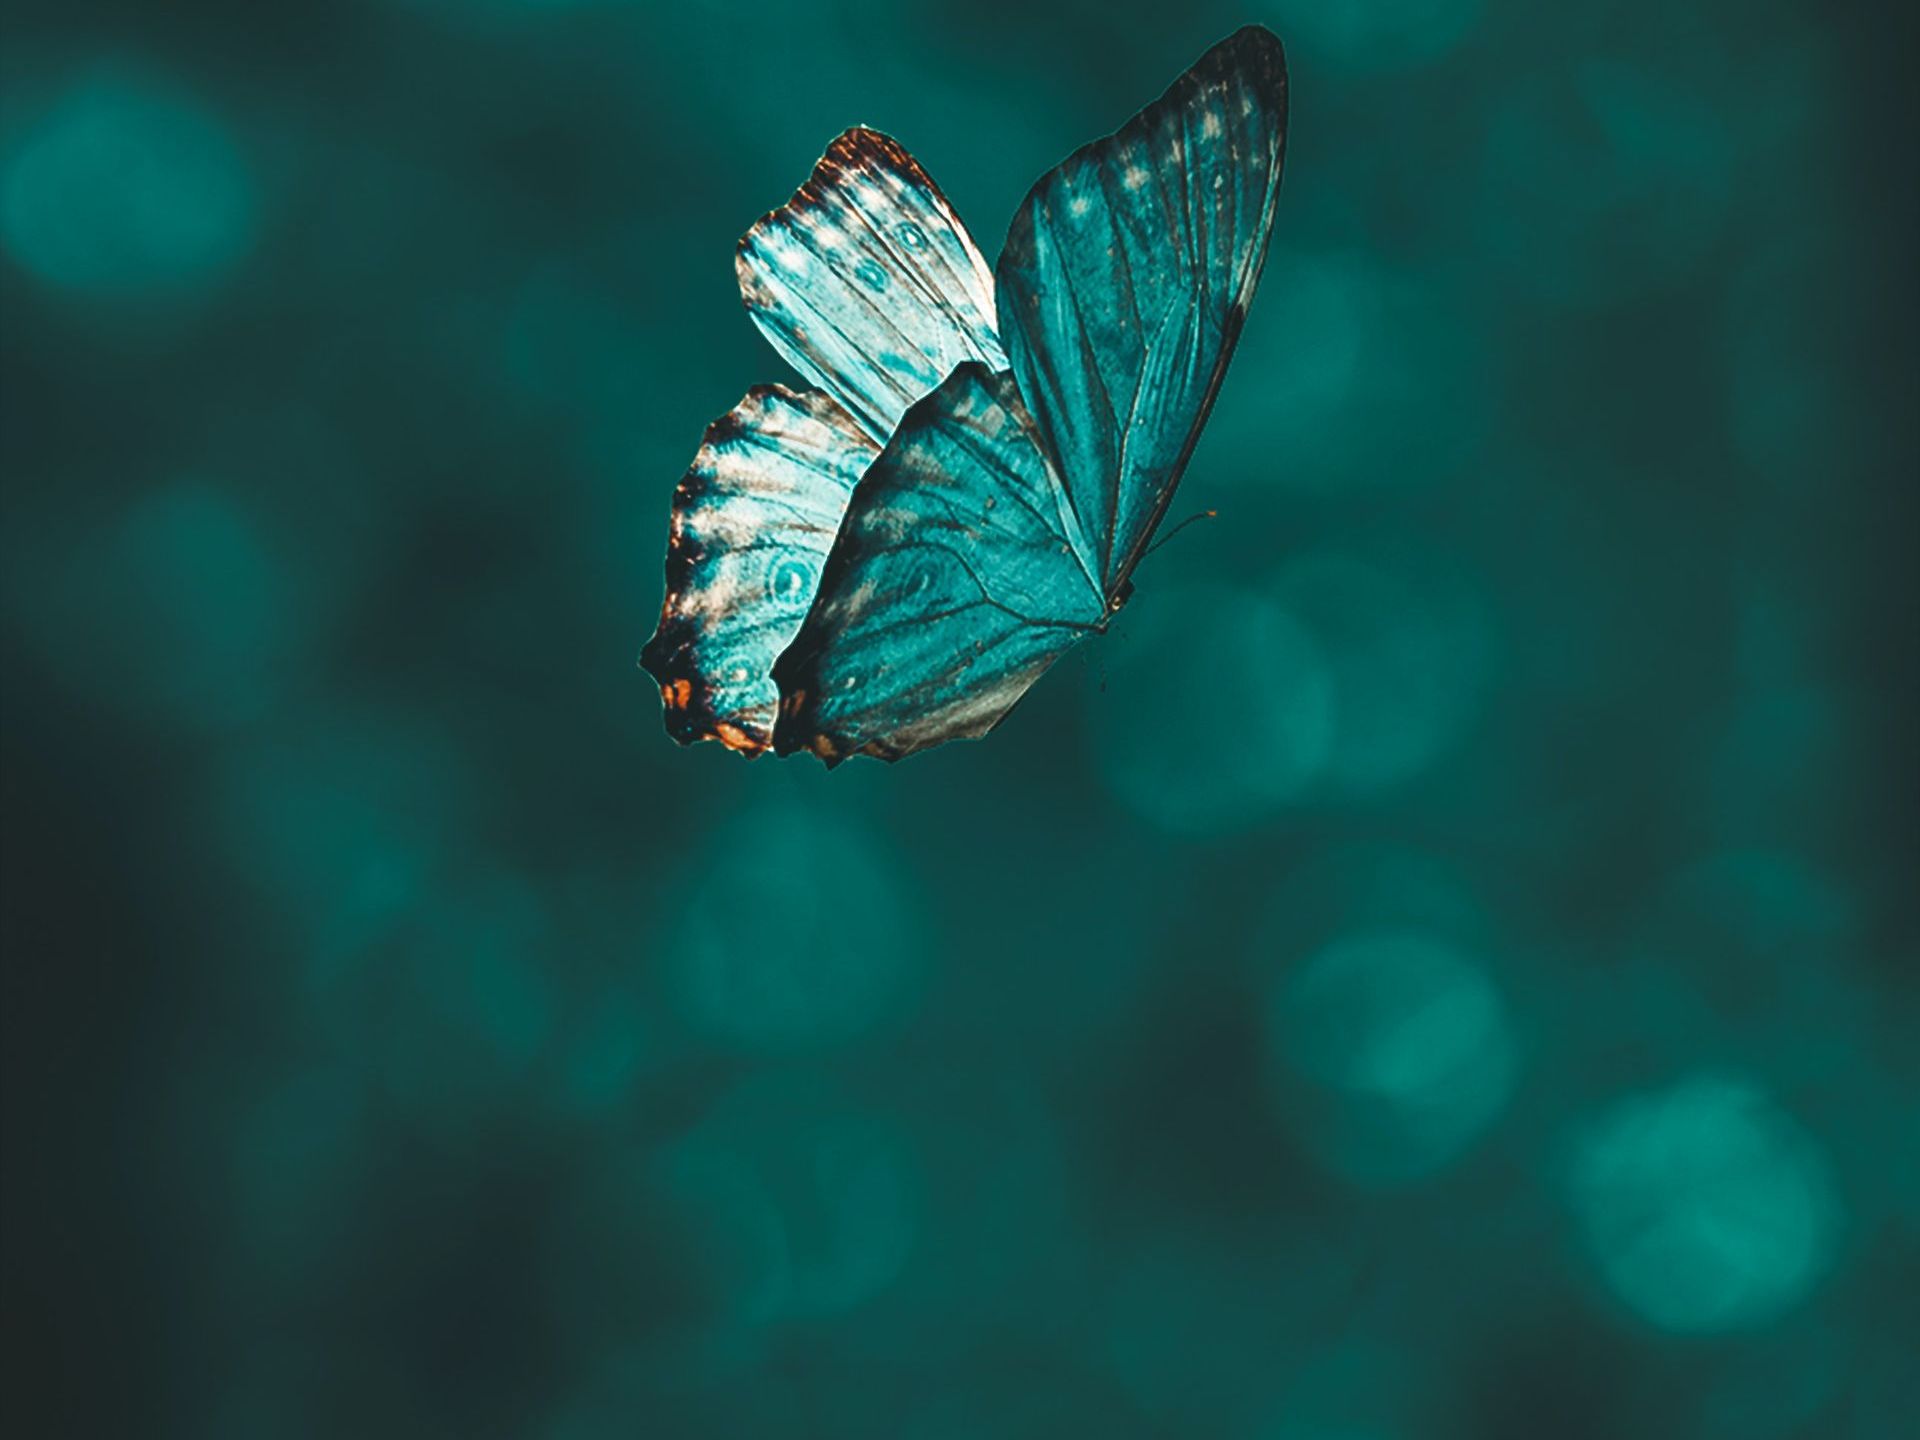 Caerus butterfly image